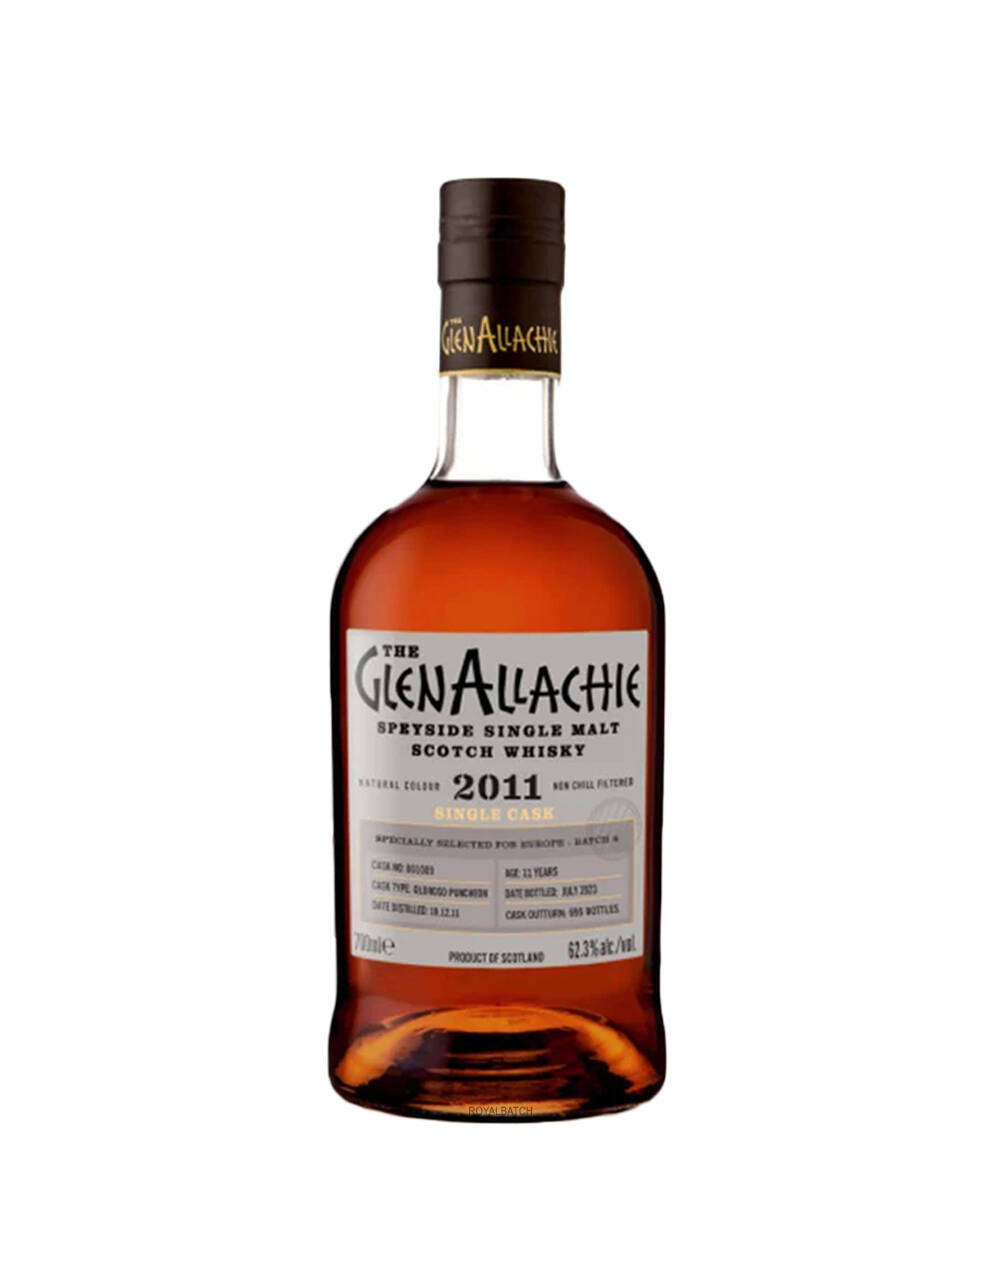 The GlenAllachie Speyside Single Cask Scotch Whiskey 2011